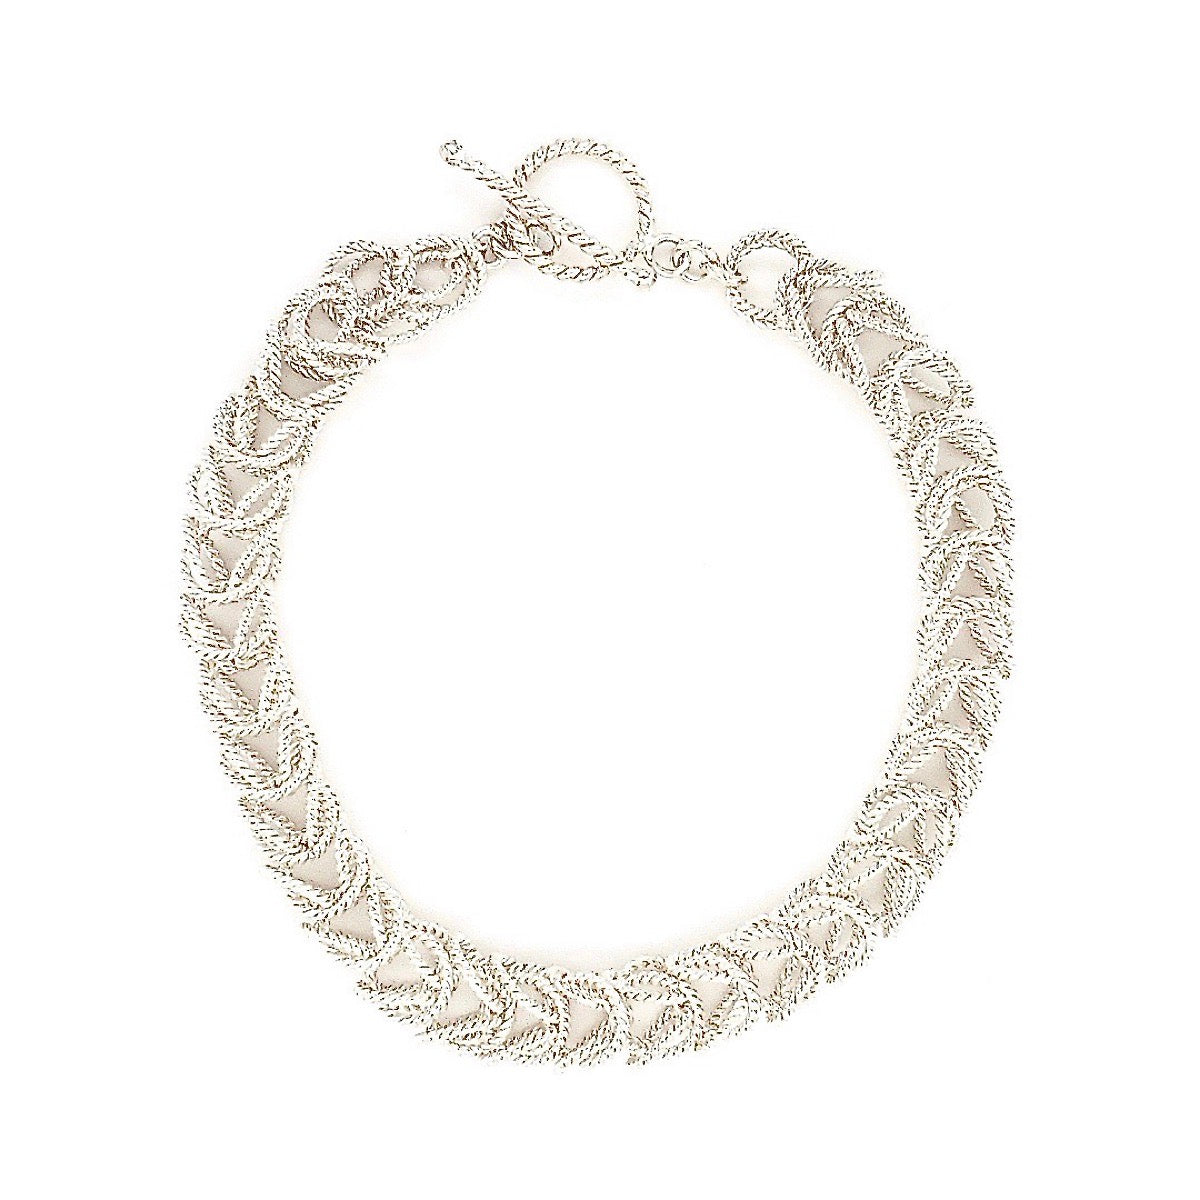 7mm Silver Bellezza Bracelet on white background / Arpaia Lang